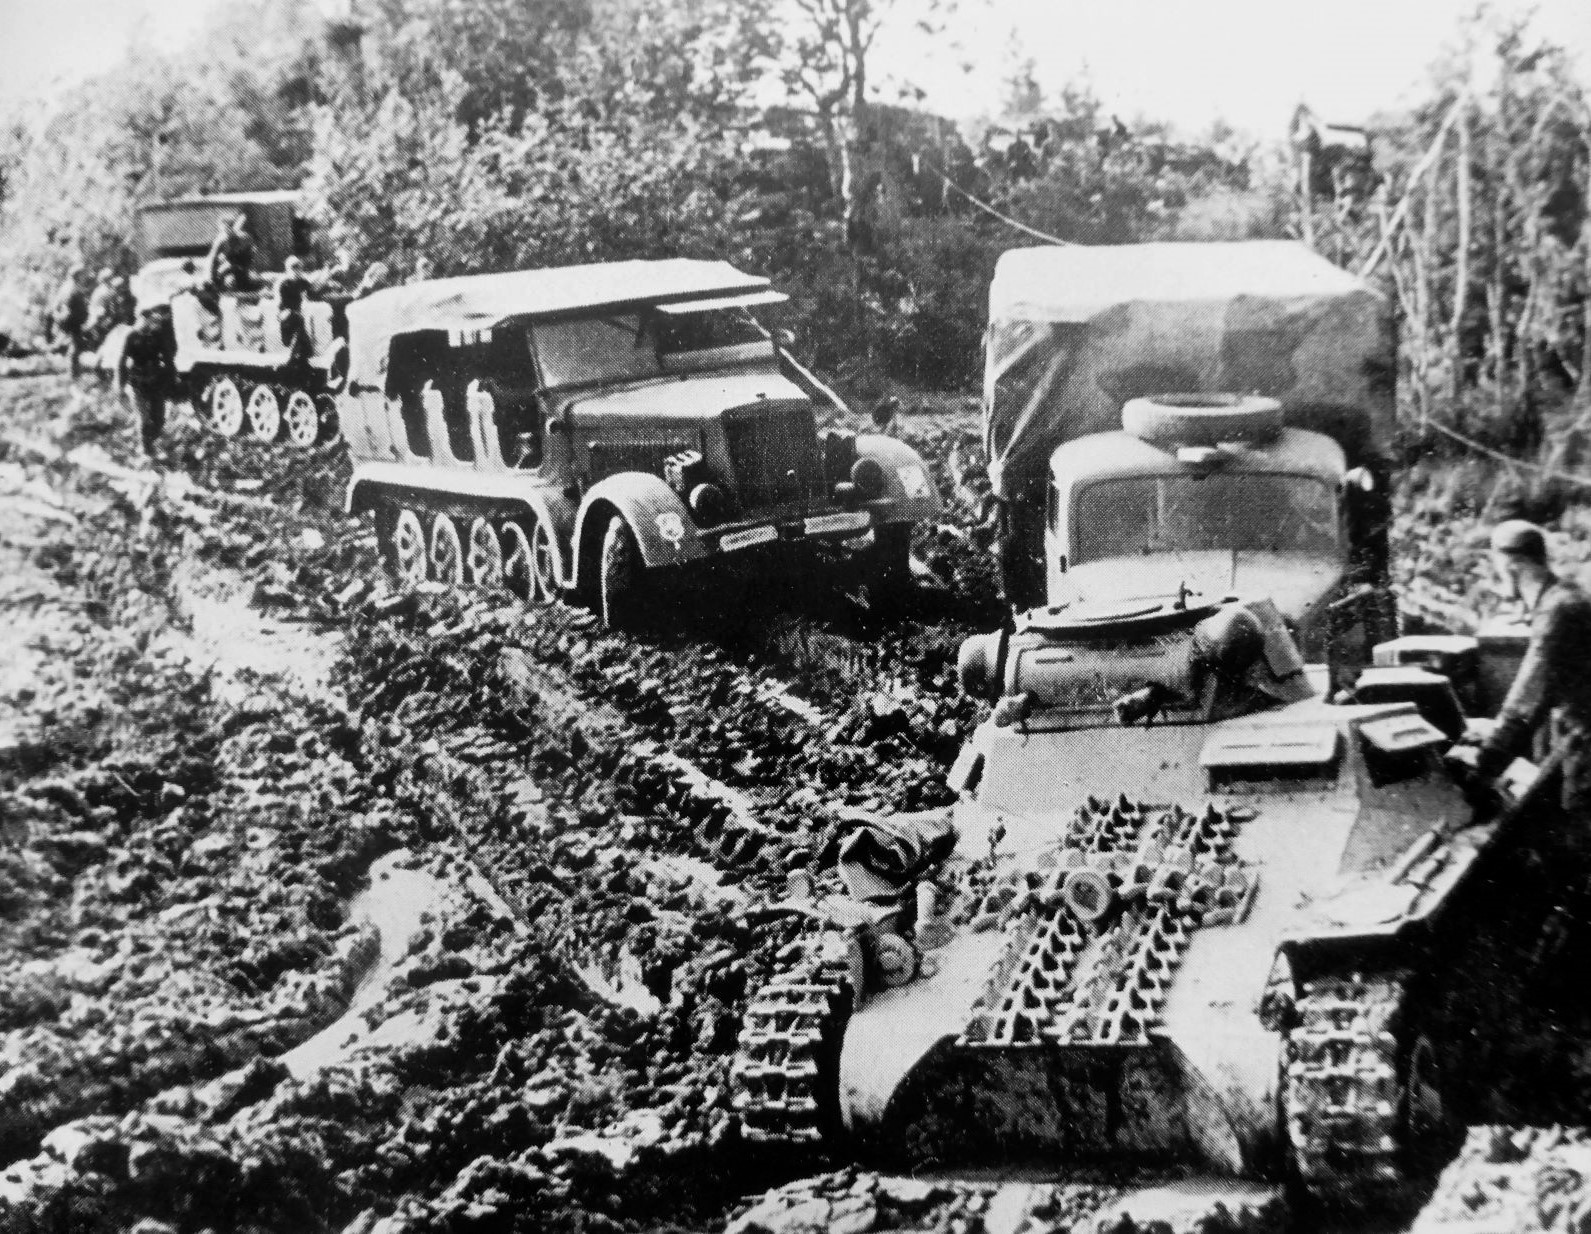 Танки застряли немецкие танки